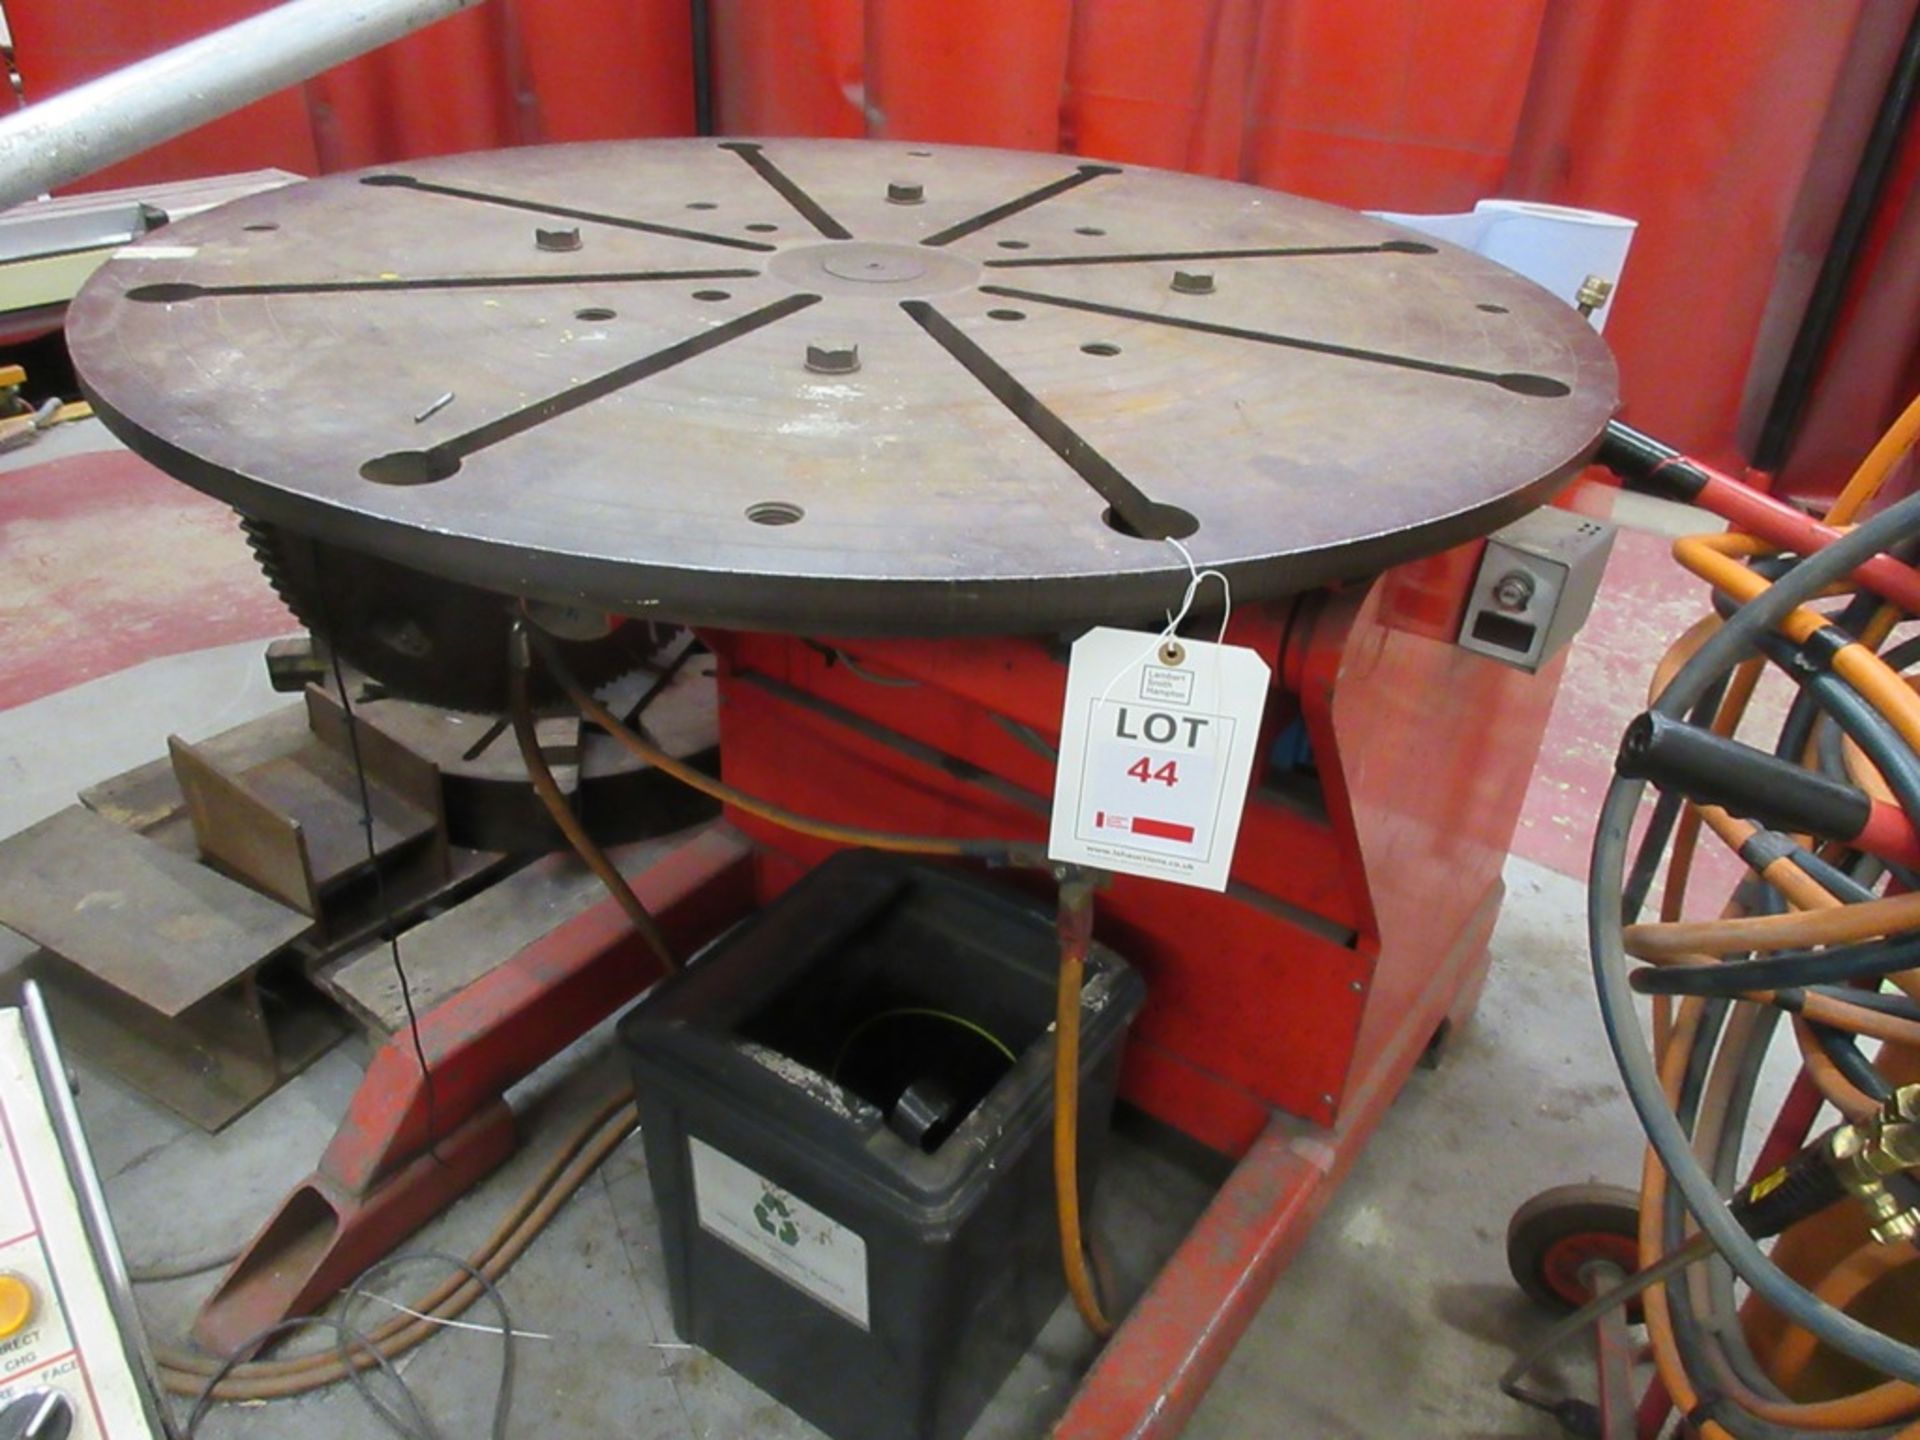 Key Plant VP15 1.5 tonne welding positioner, plate diameter 1150mm - Image 2 of 5